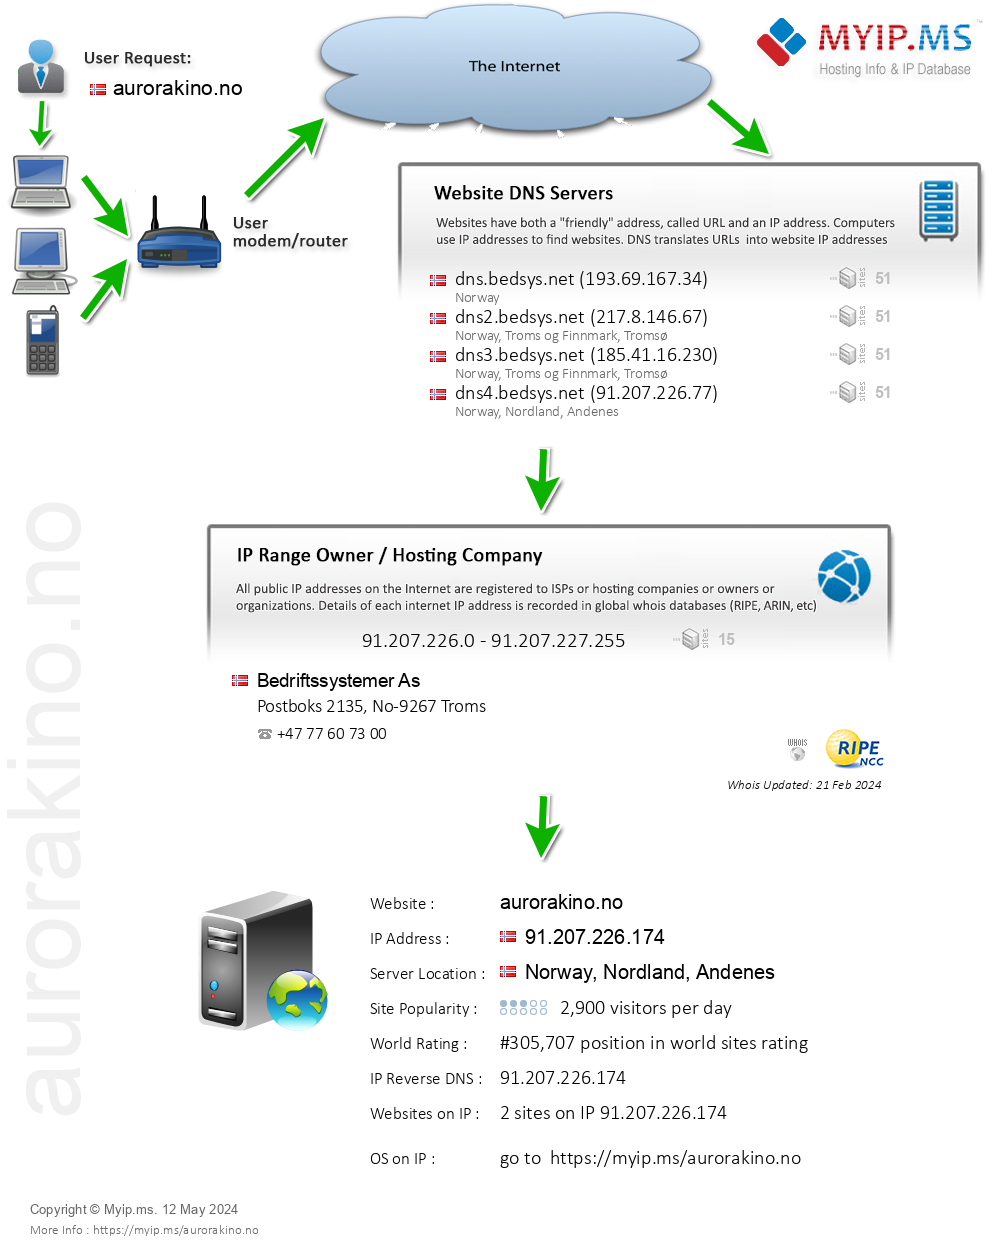 Aurorakino.no - Website Hosting Visual IP Diagram